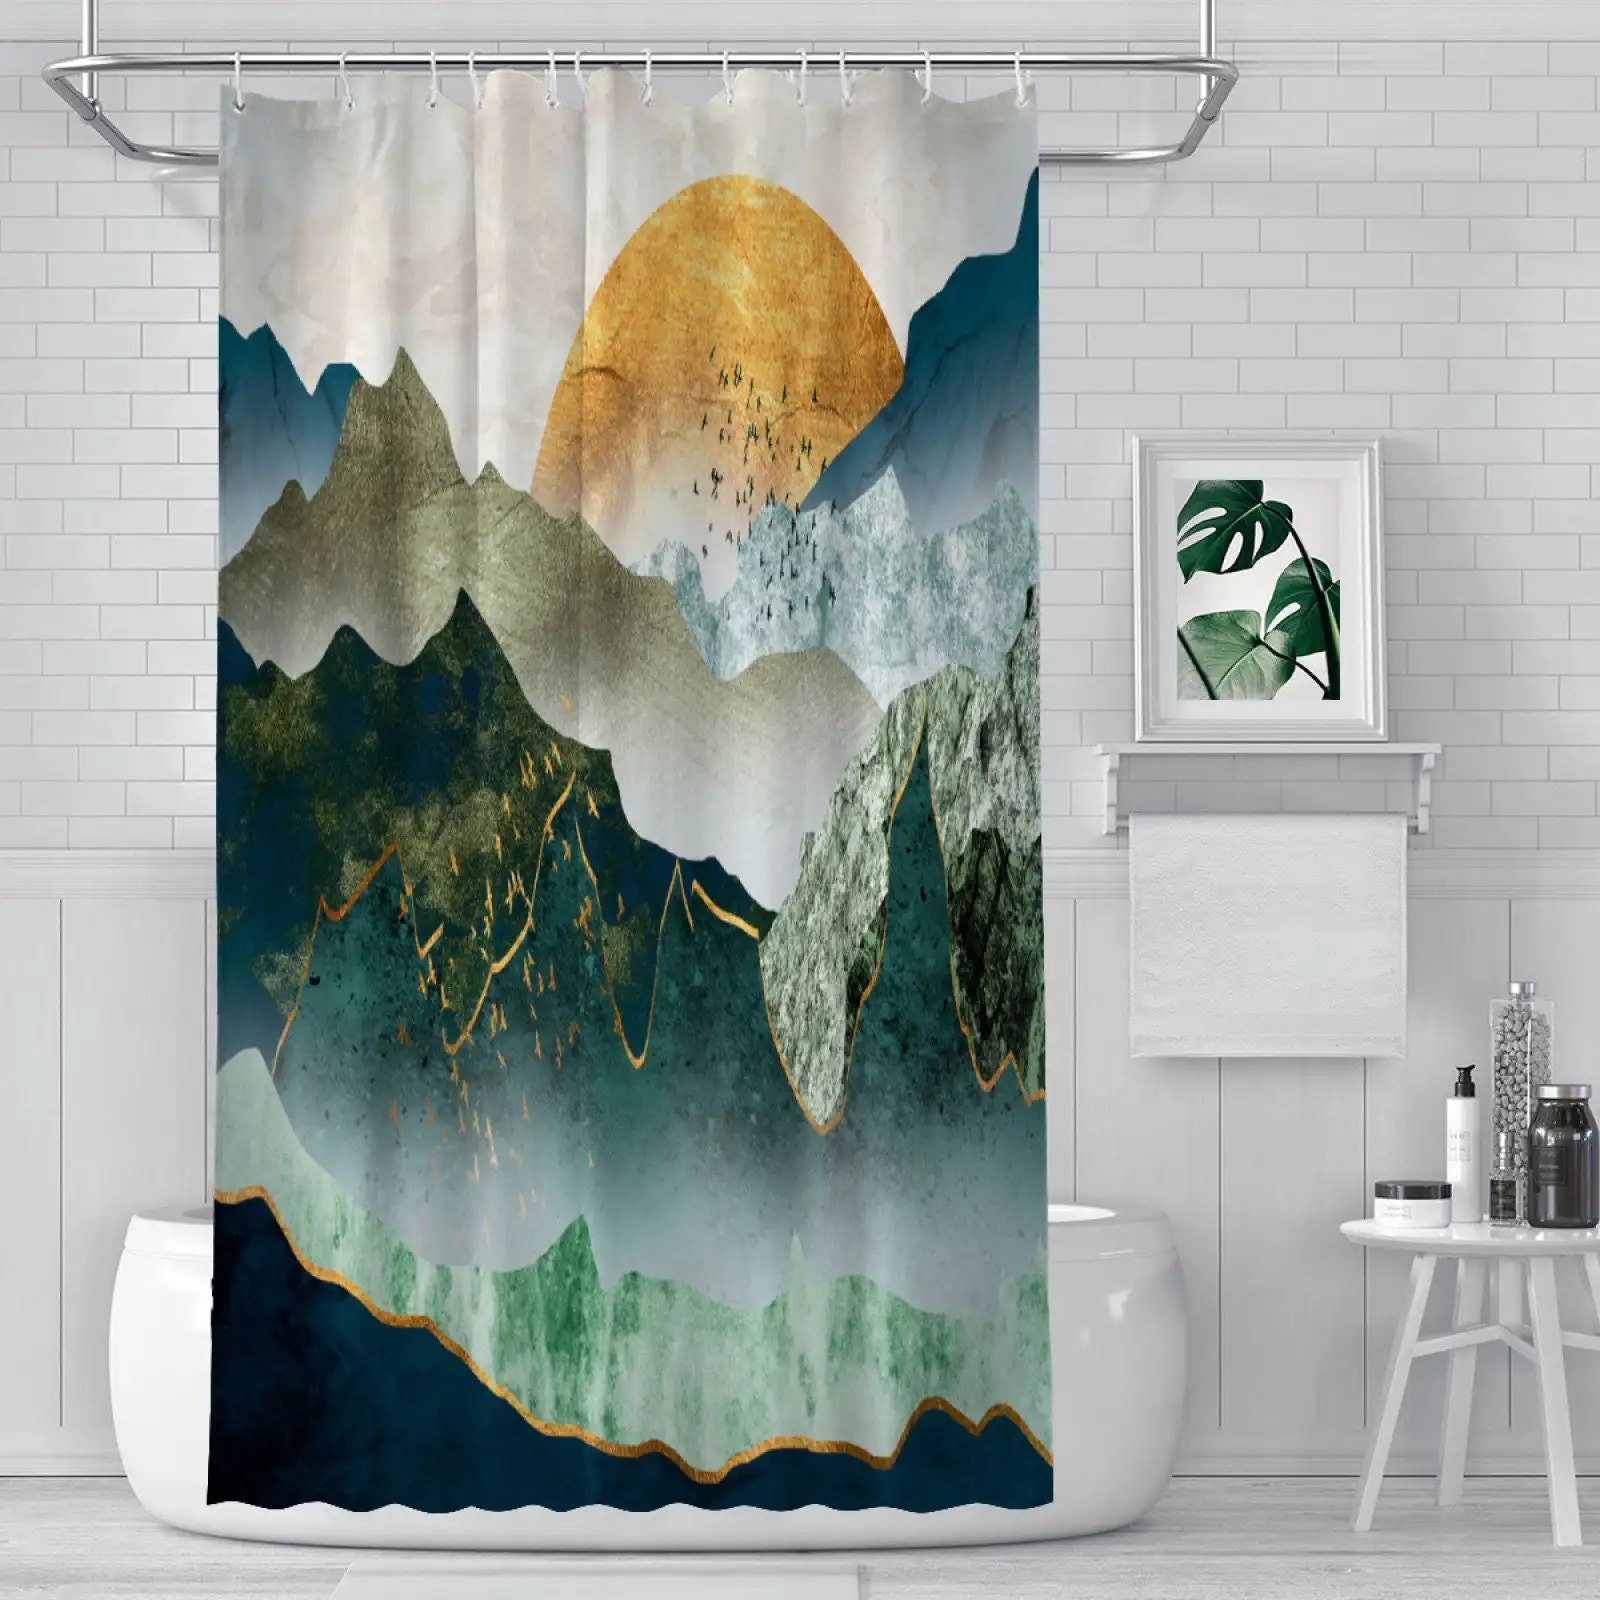 Green Golden Mountain Shower Curtain Abstract Mountain